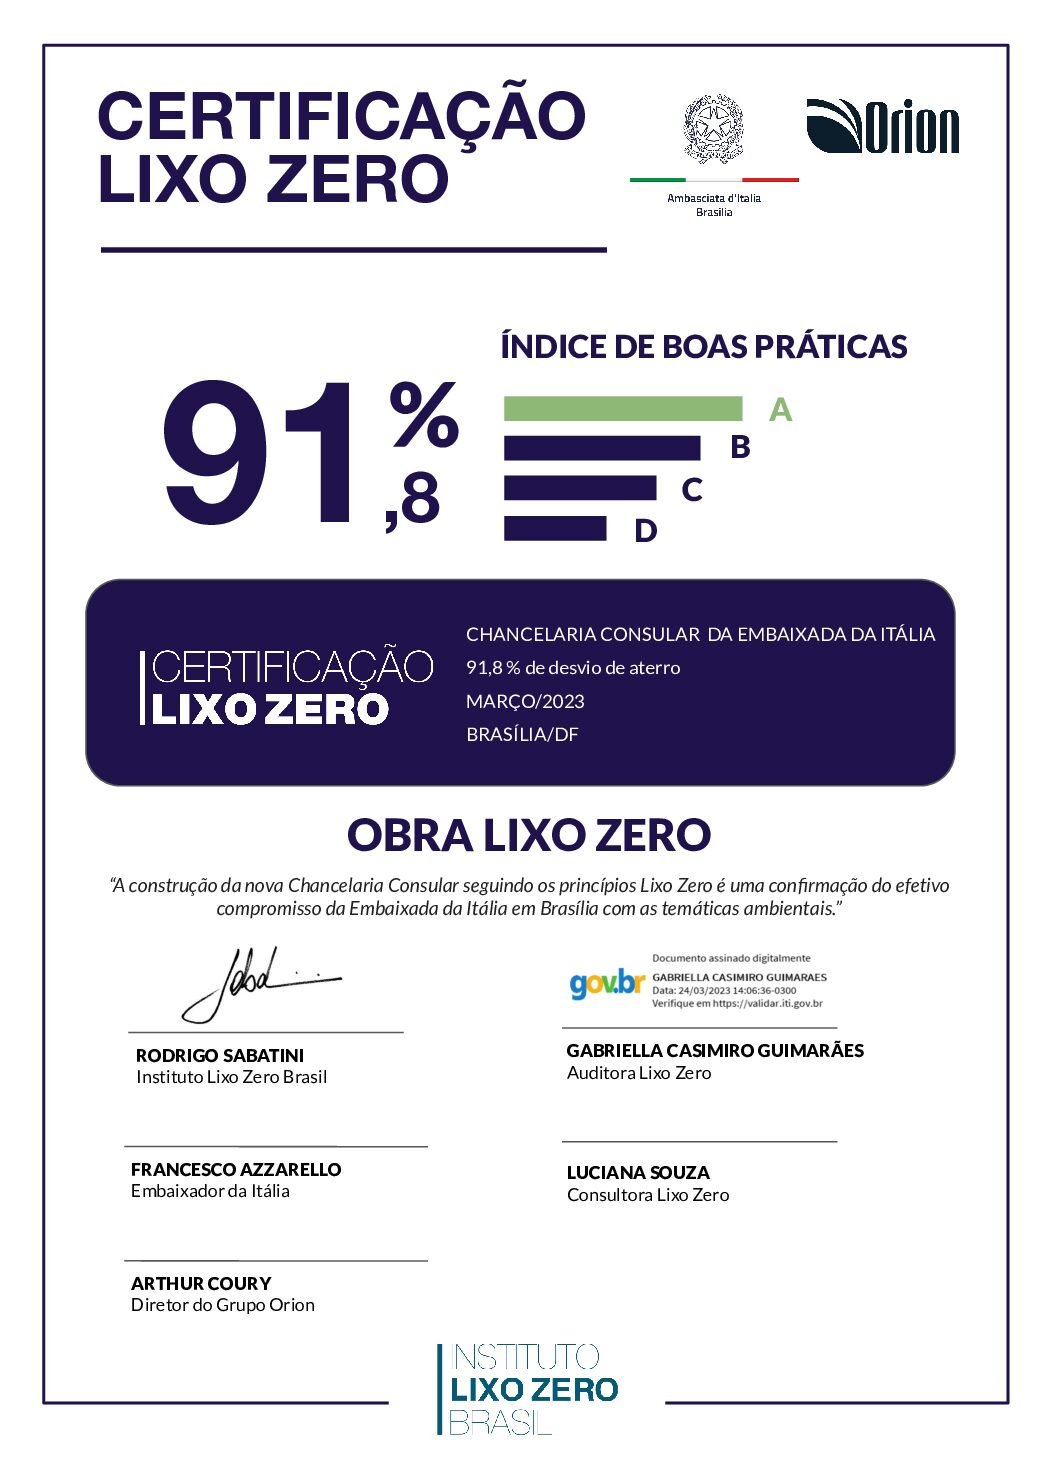 Cópia de CertificaçãoLixoZero_ObraLixoZero_Chancelaria-da-Embaixada-da-Itália_Brasília_DF.pptx (1)